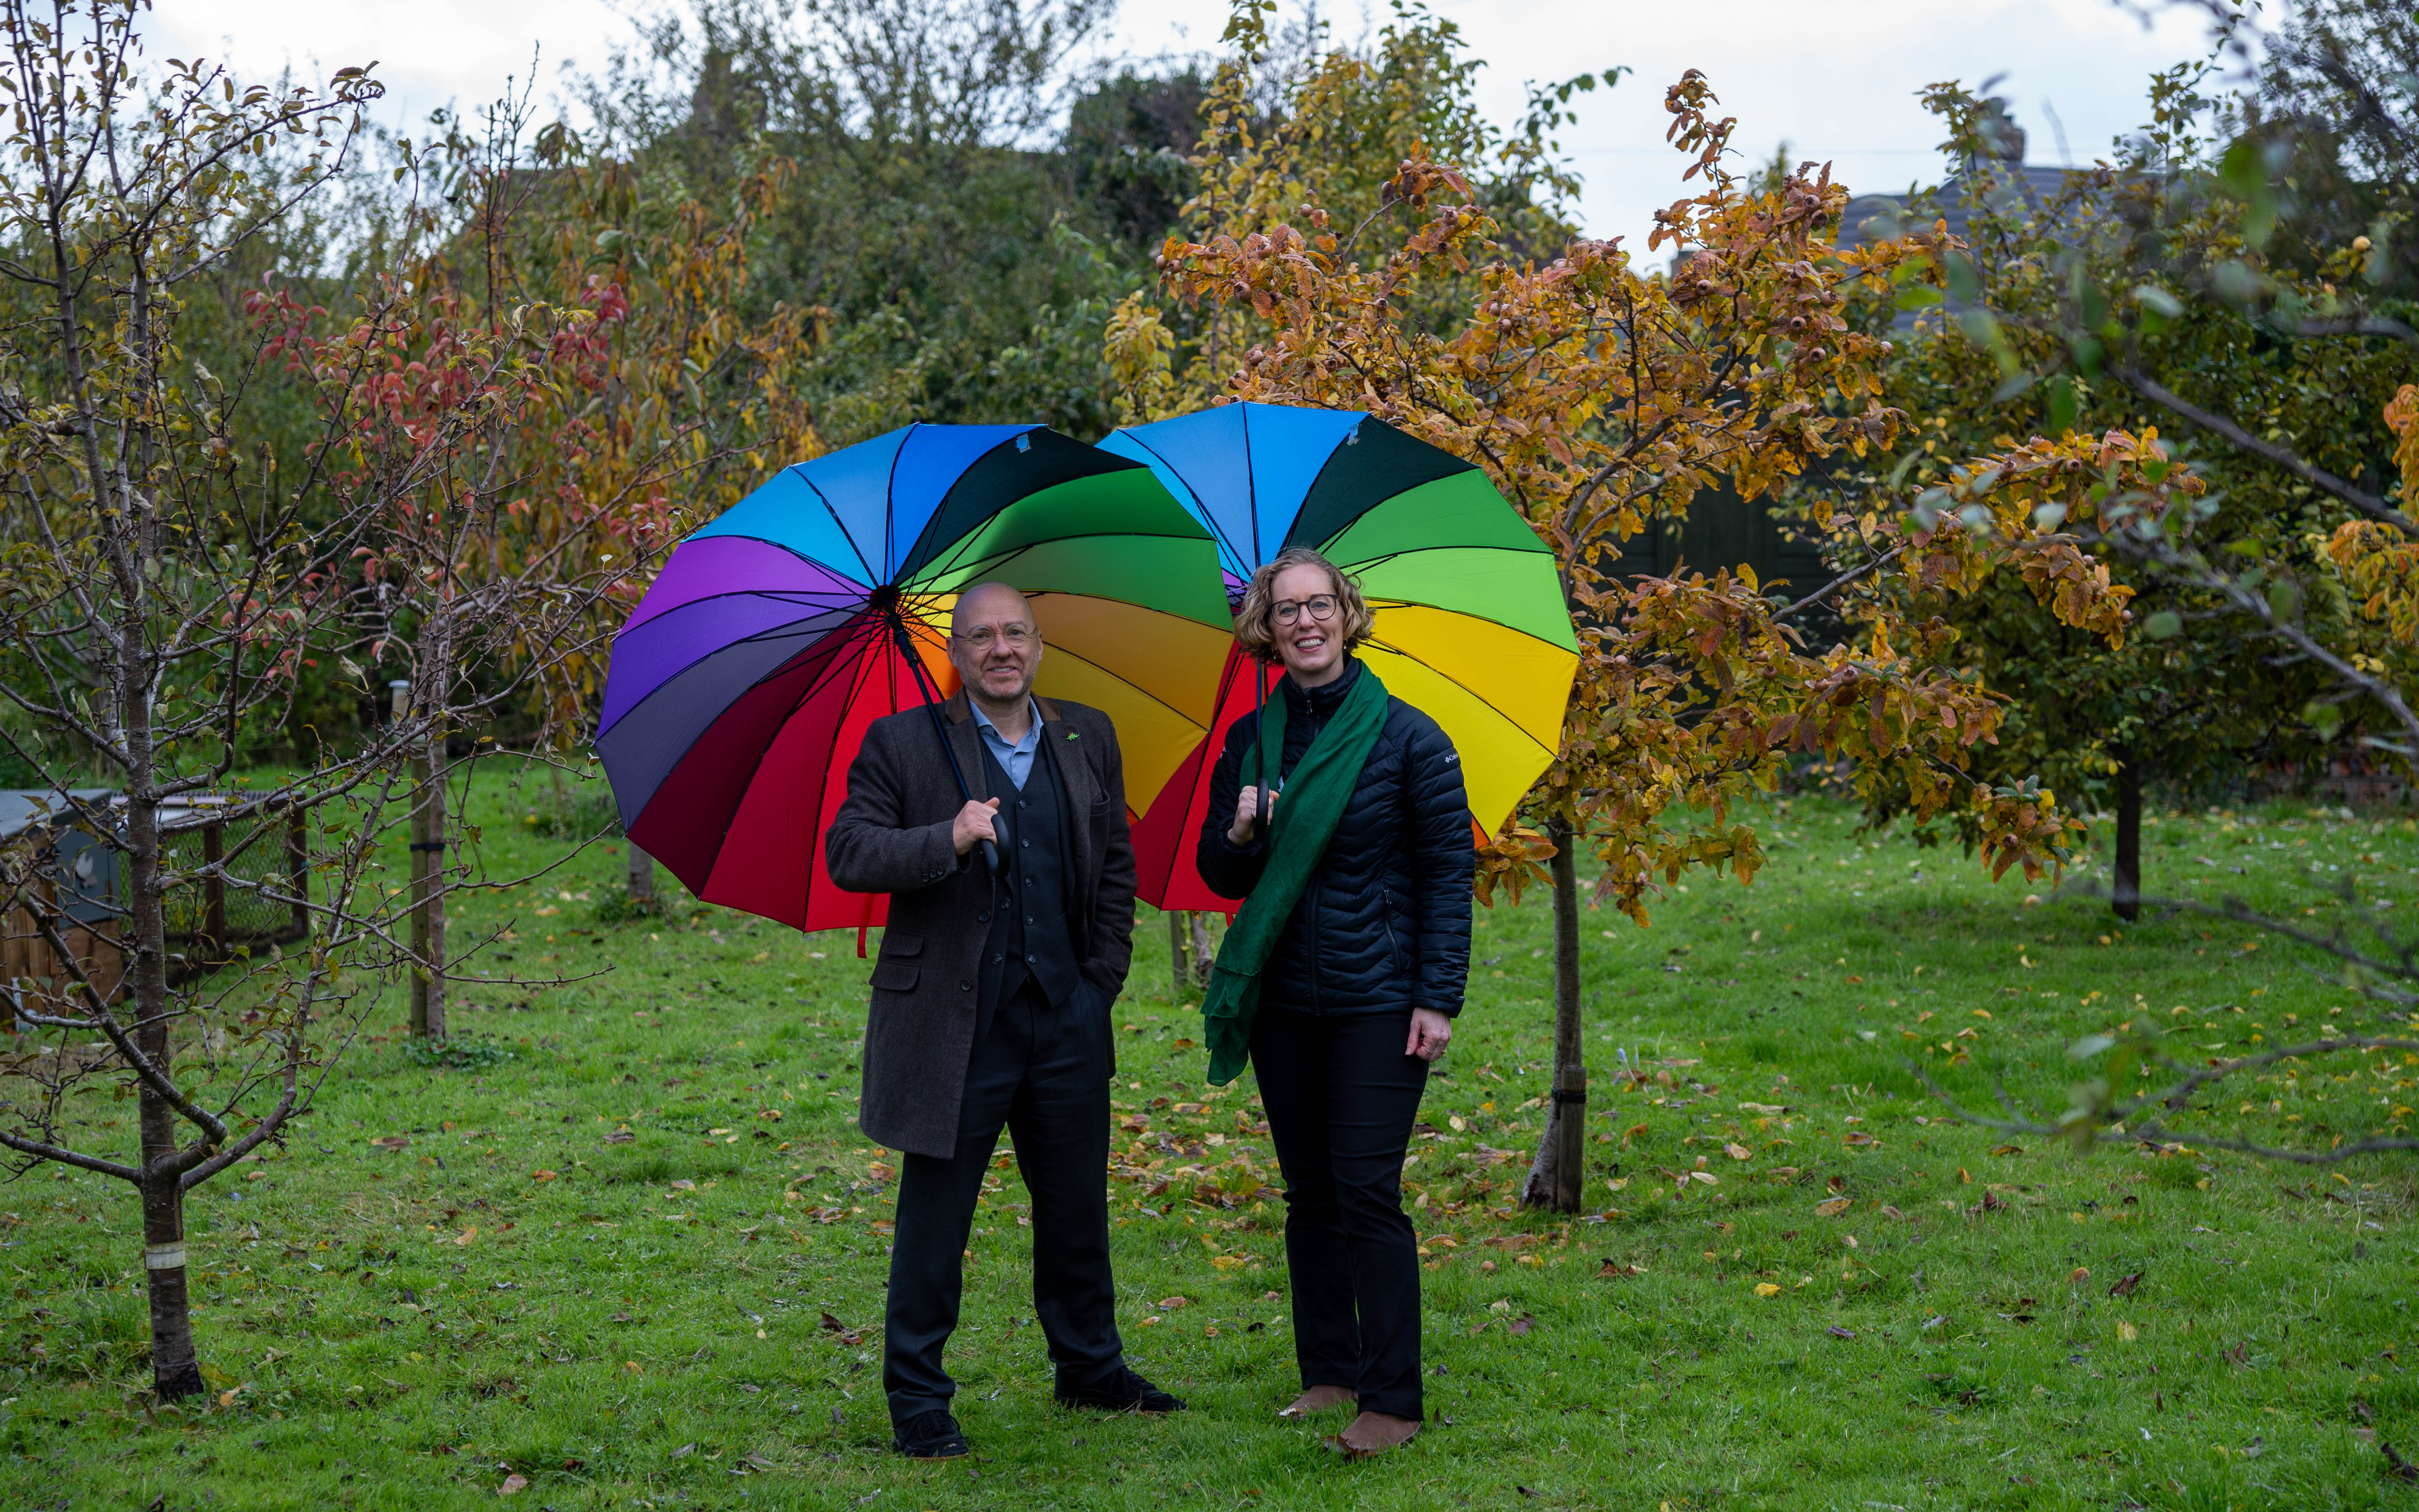 Patrick Harvie and Lorna Slater with rainbow umbrellas